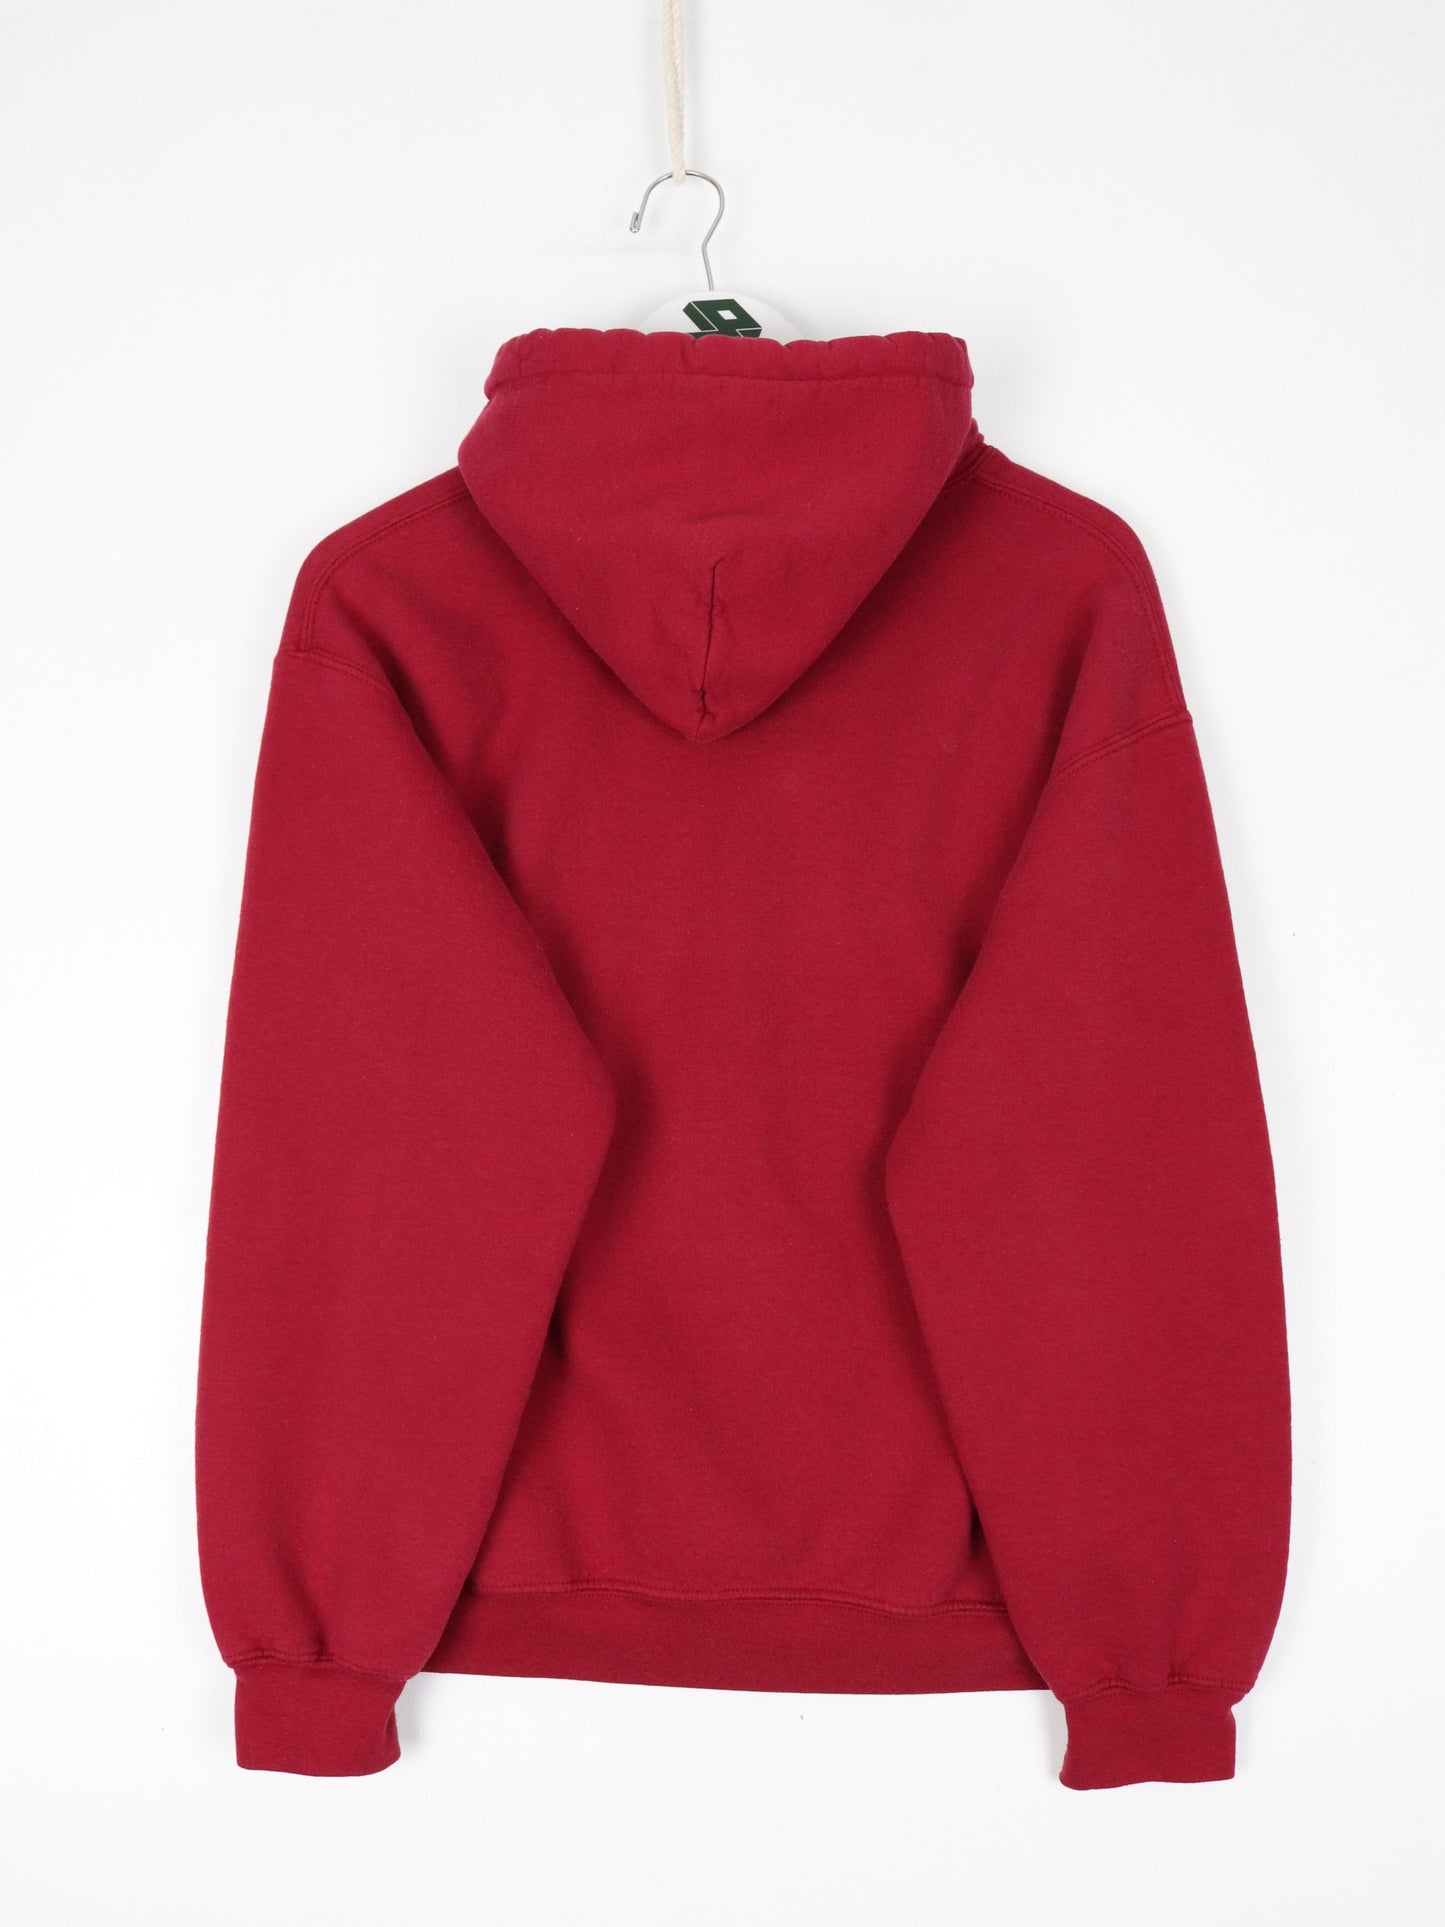 Alabama Crimson Tide Sweatshirt Mens Small Red College Hoodie